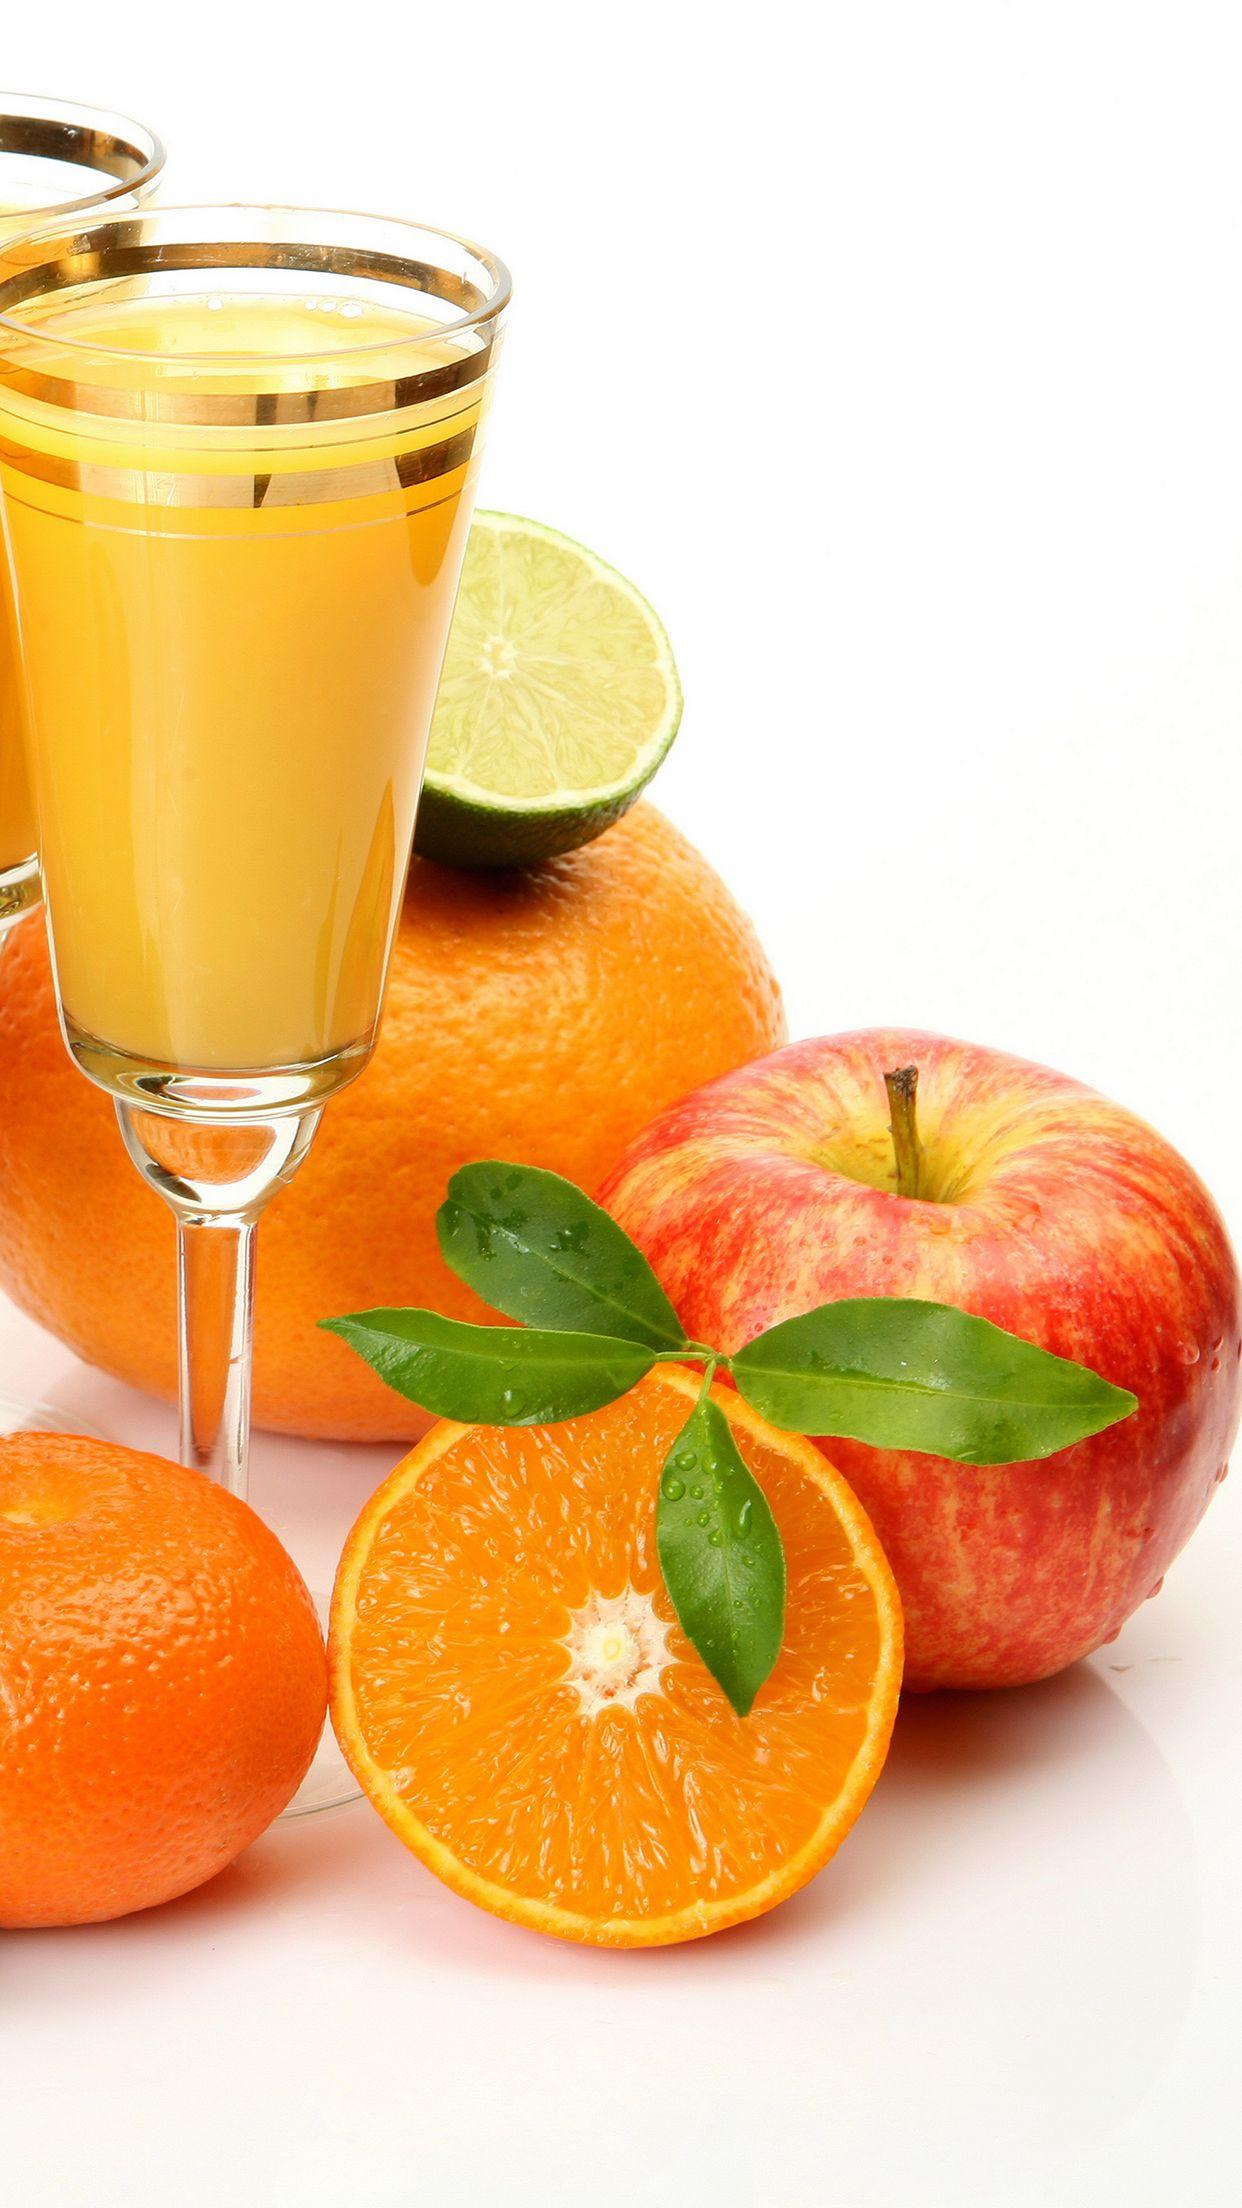 Fruit, Apple and Orange Juice Wallpaper for iPhone X, 6